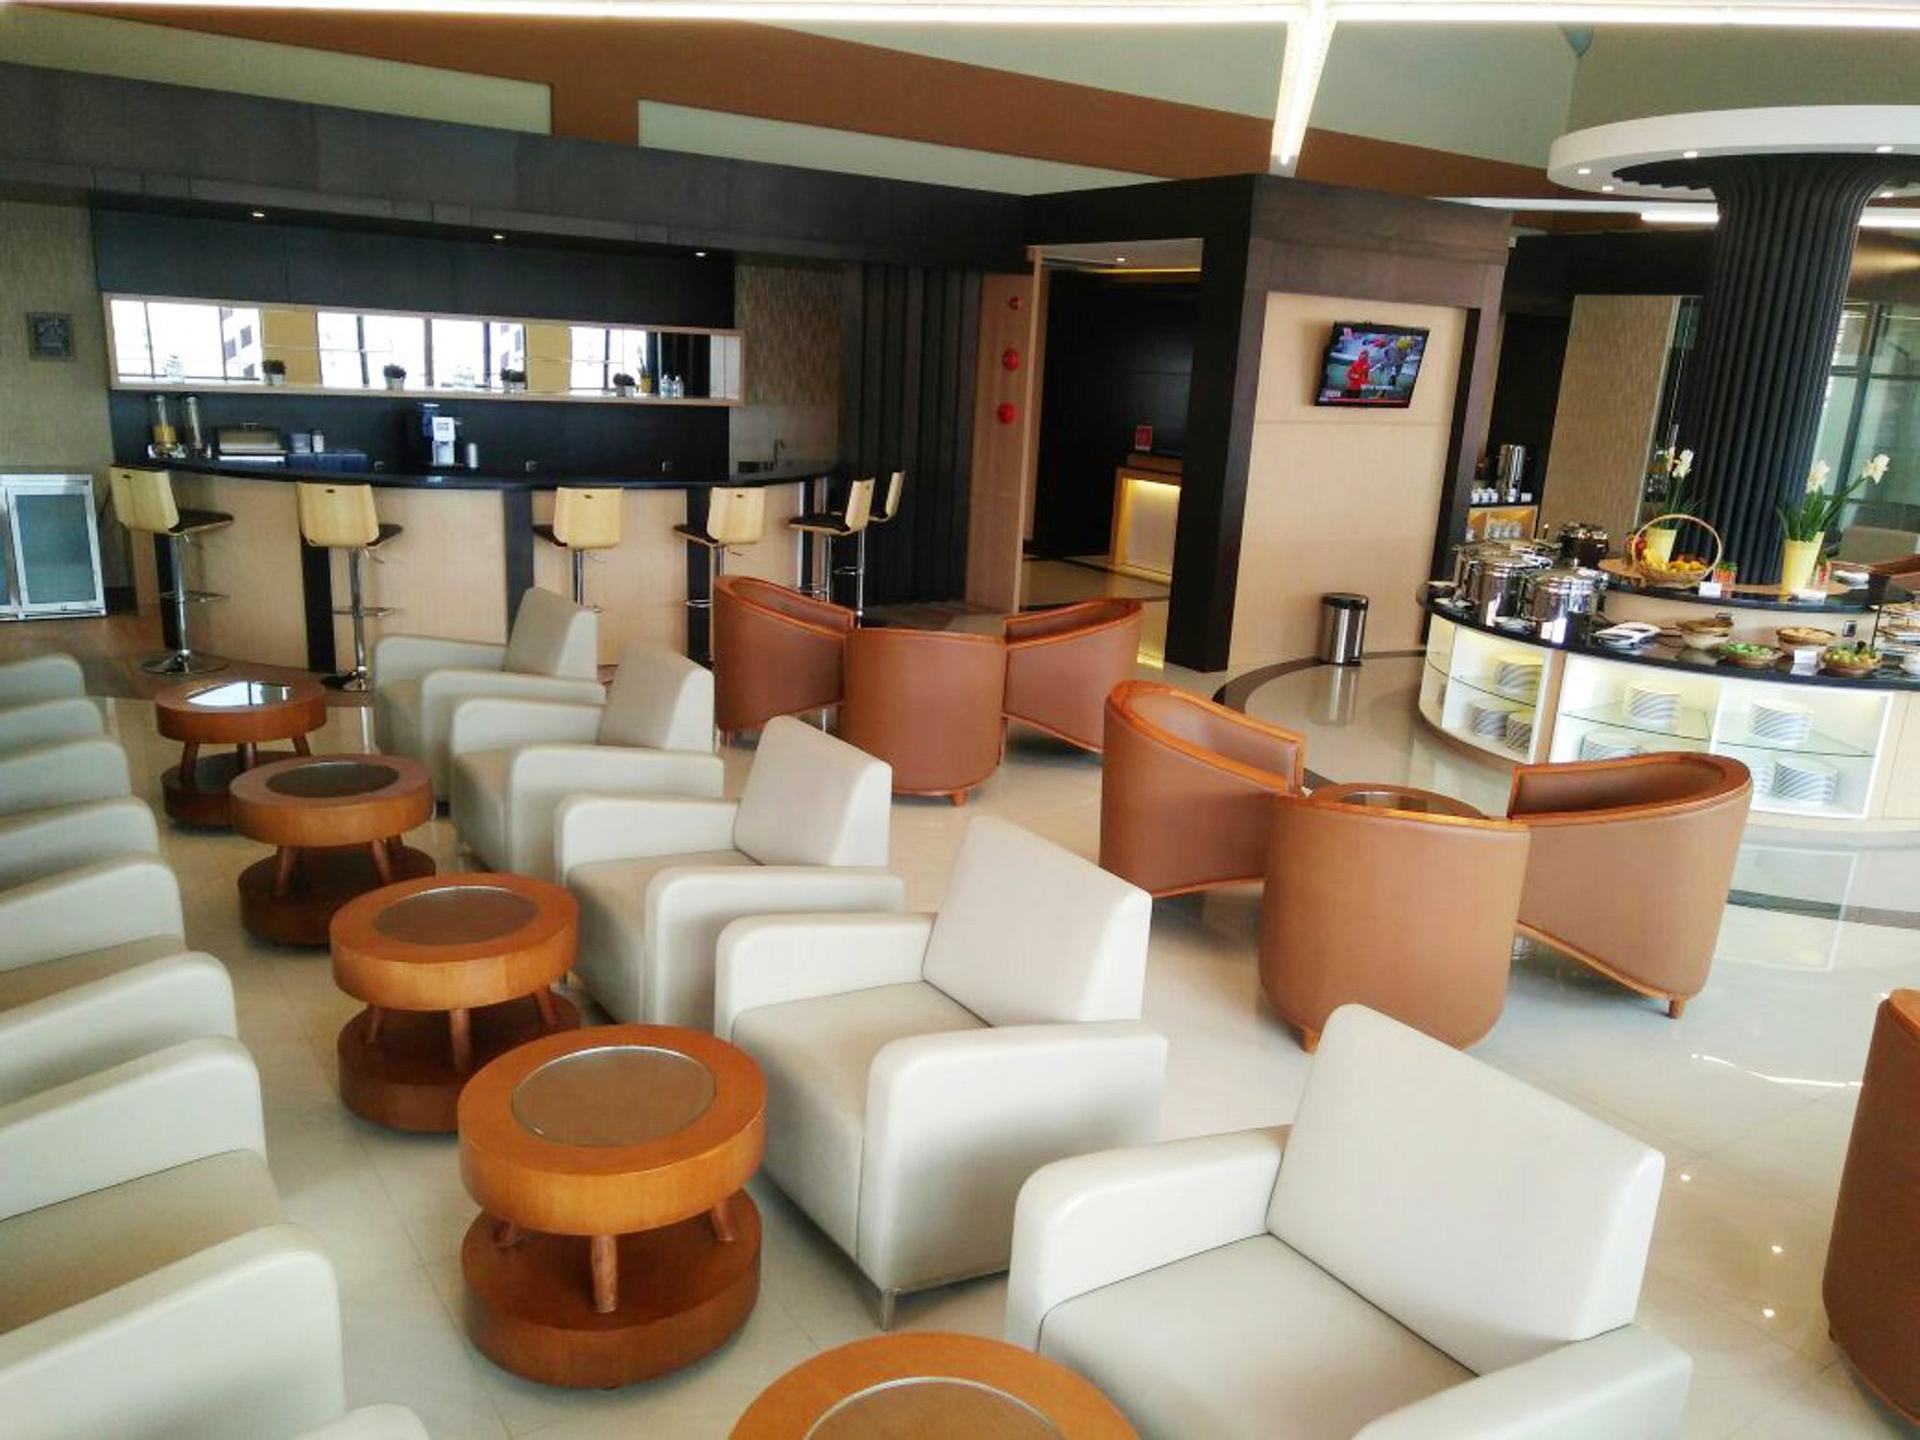 Concordia Lounge image 3 of 21